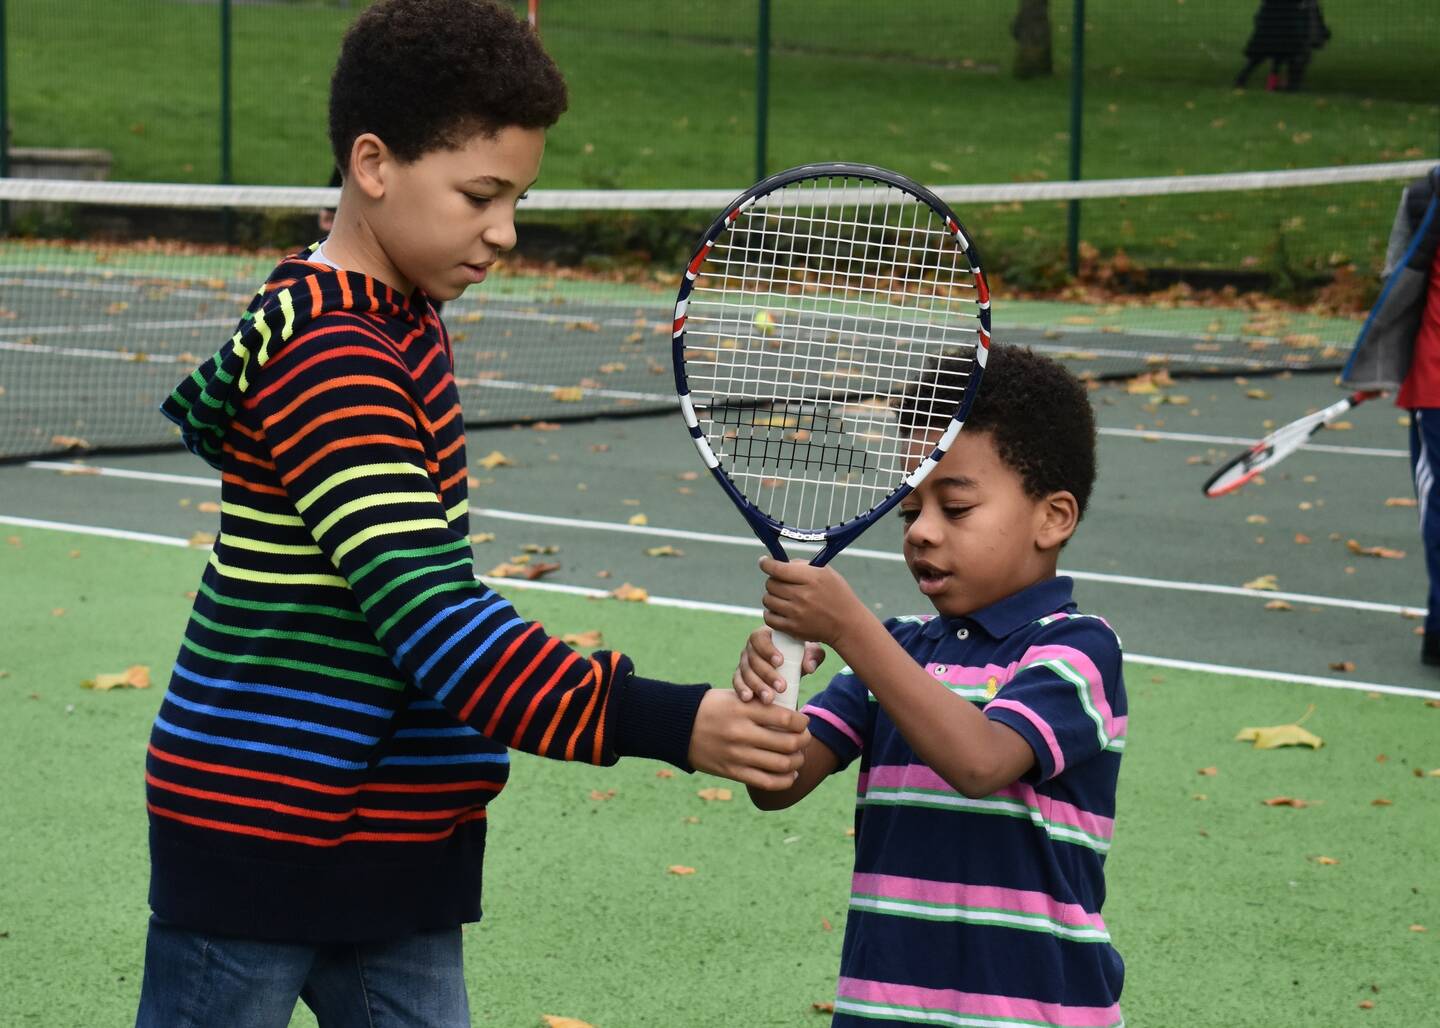 Two boys playing tennis